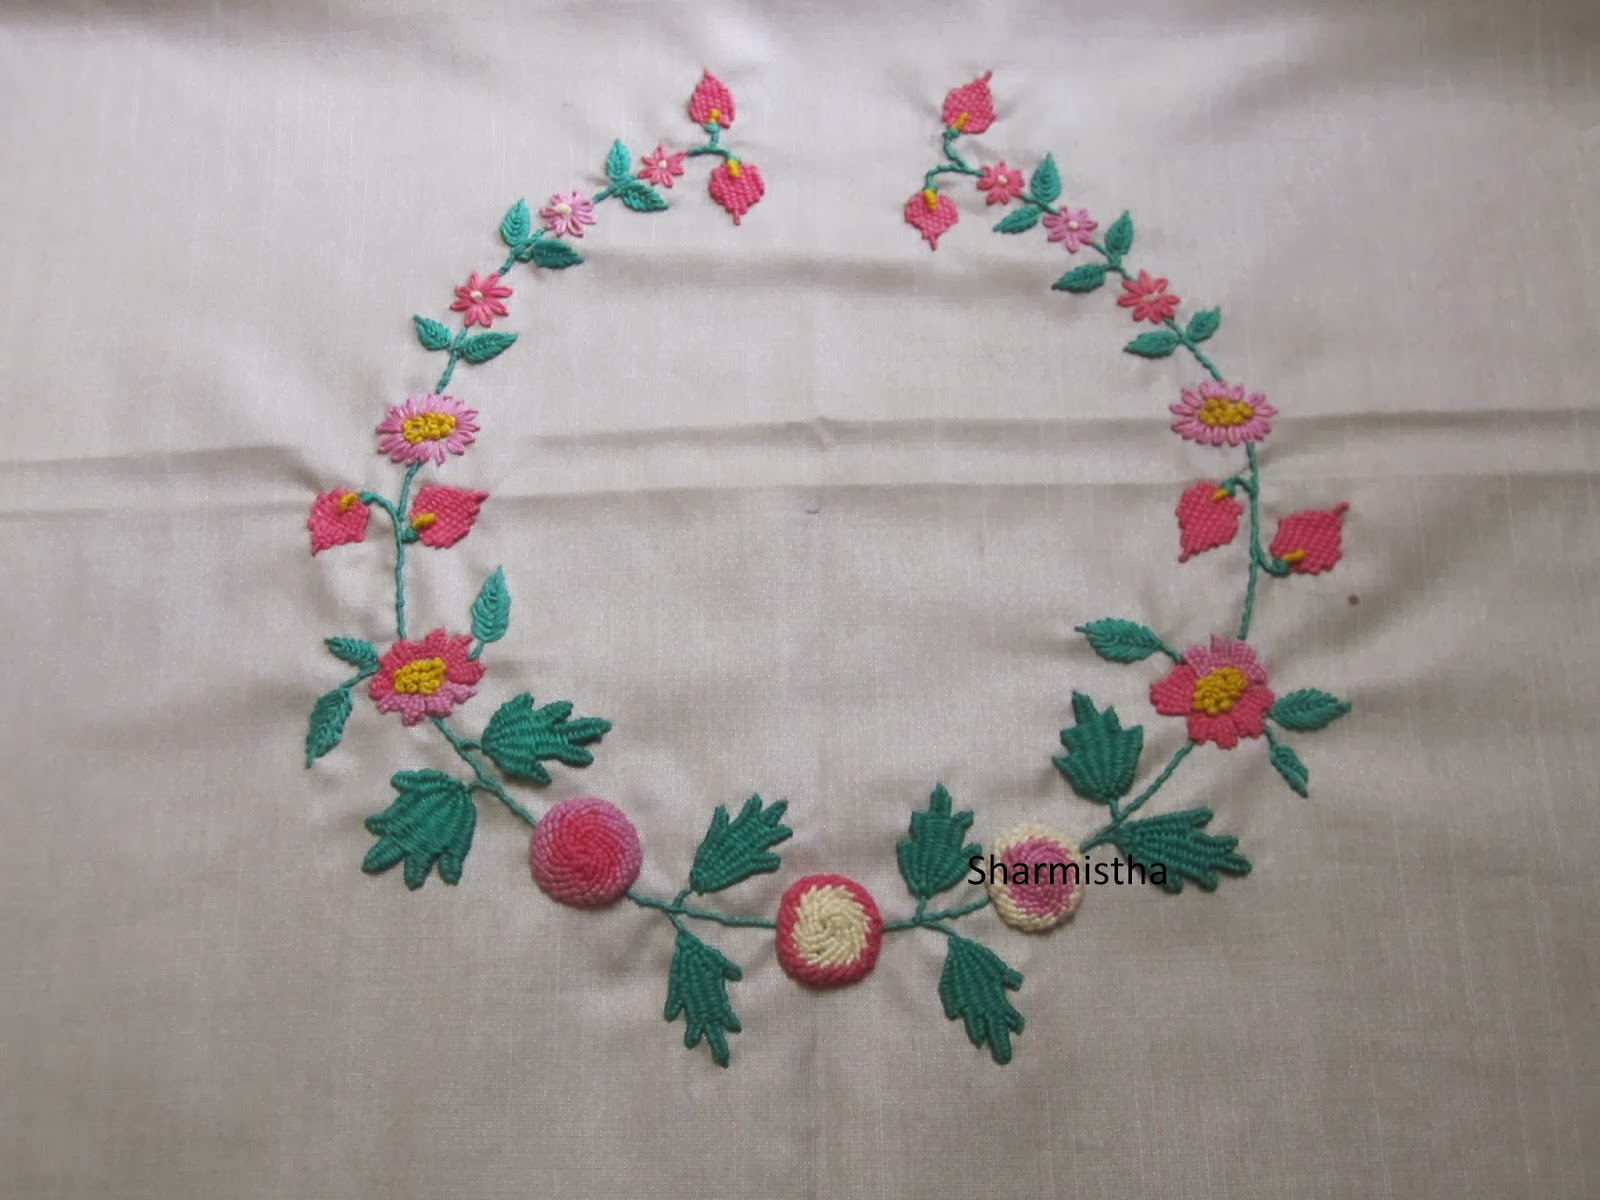 Mantra Hare Krishna. Lotus Flower Embroidery. Cross Stitch 